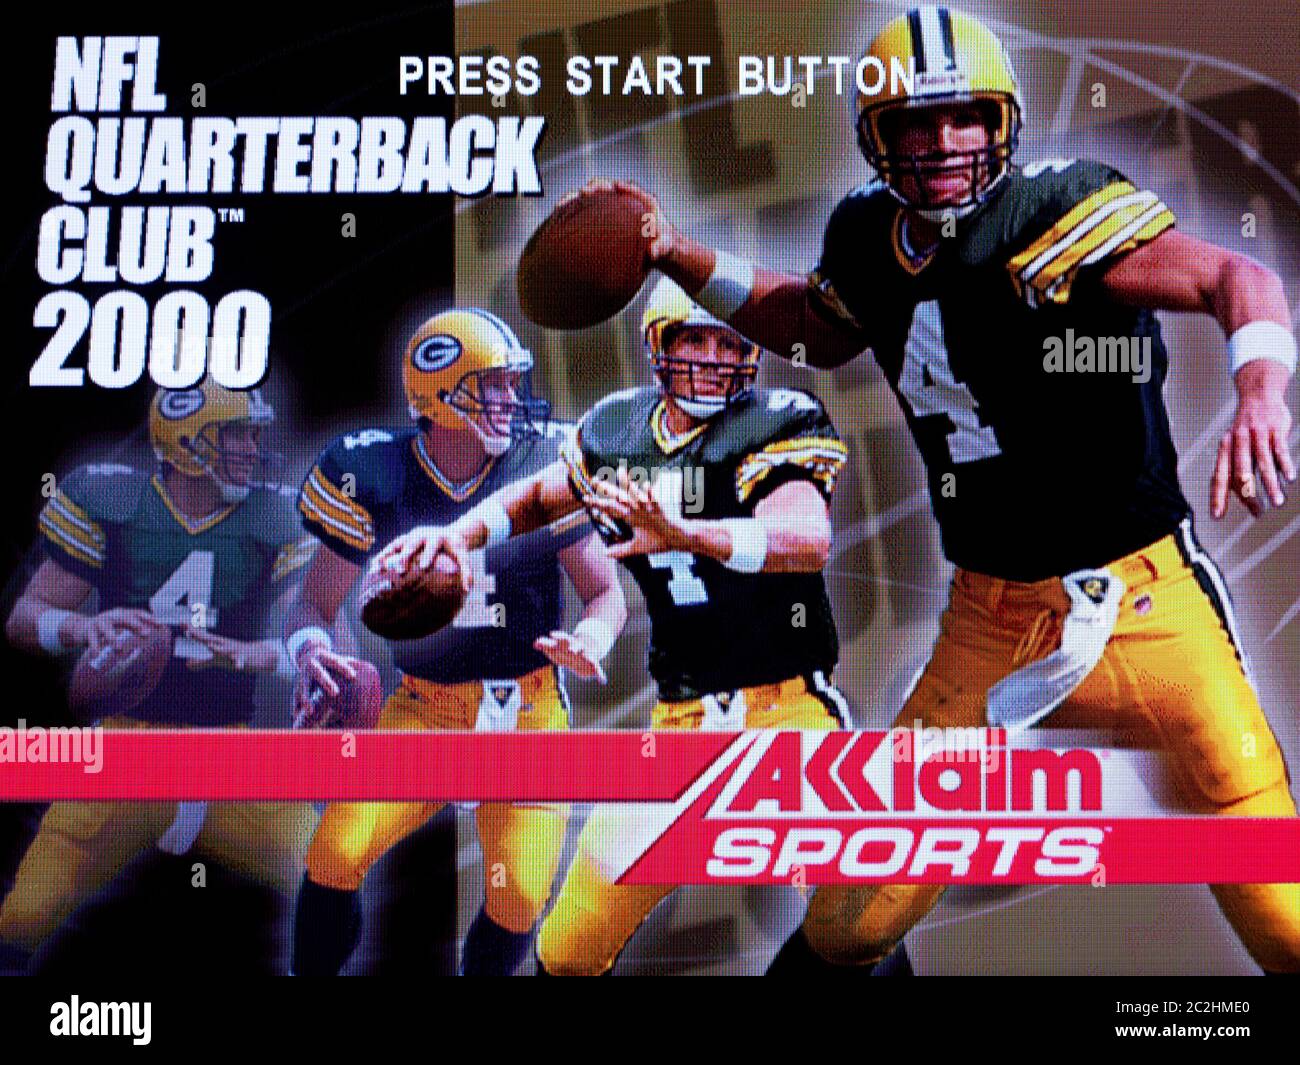 NFL Quarterback Club 2000 - Sega Dreamcast Videogame - Editorial use only Stock Photo